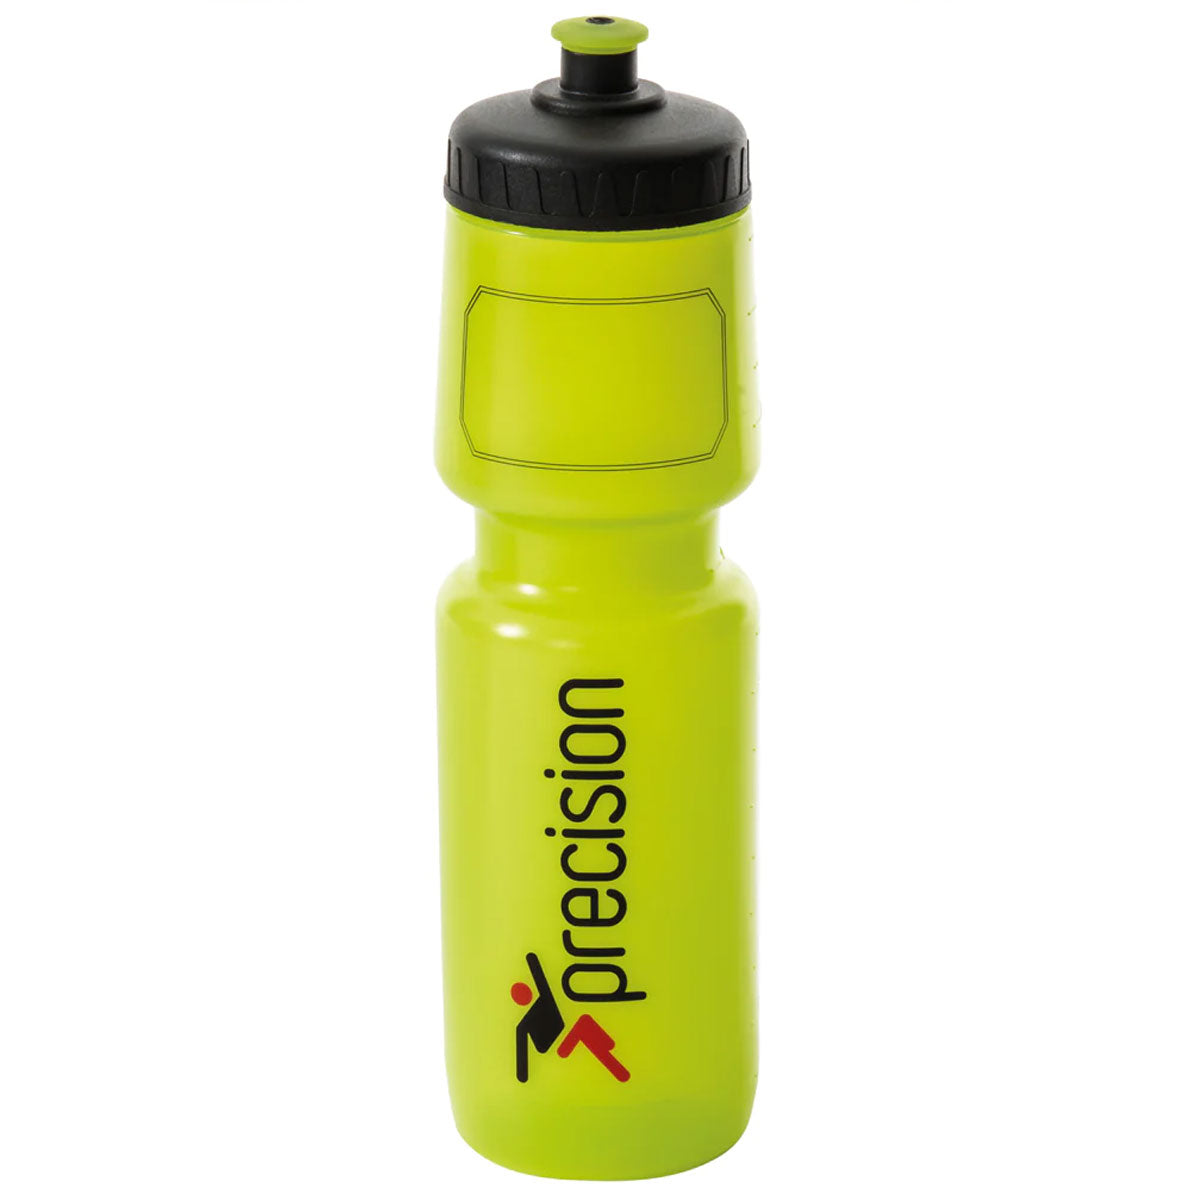 Precision Training Water Bottle 750ml